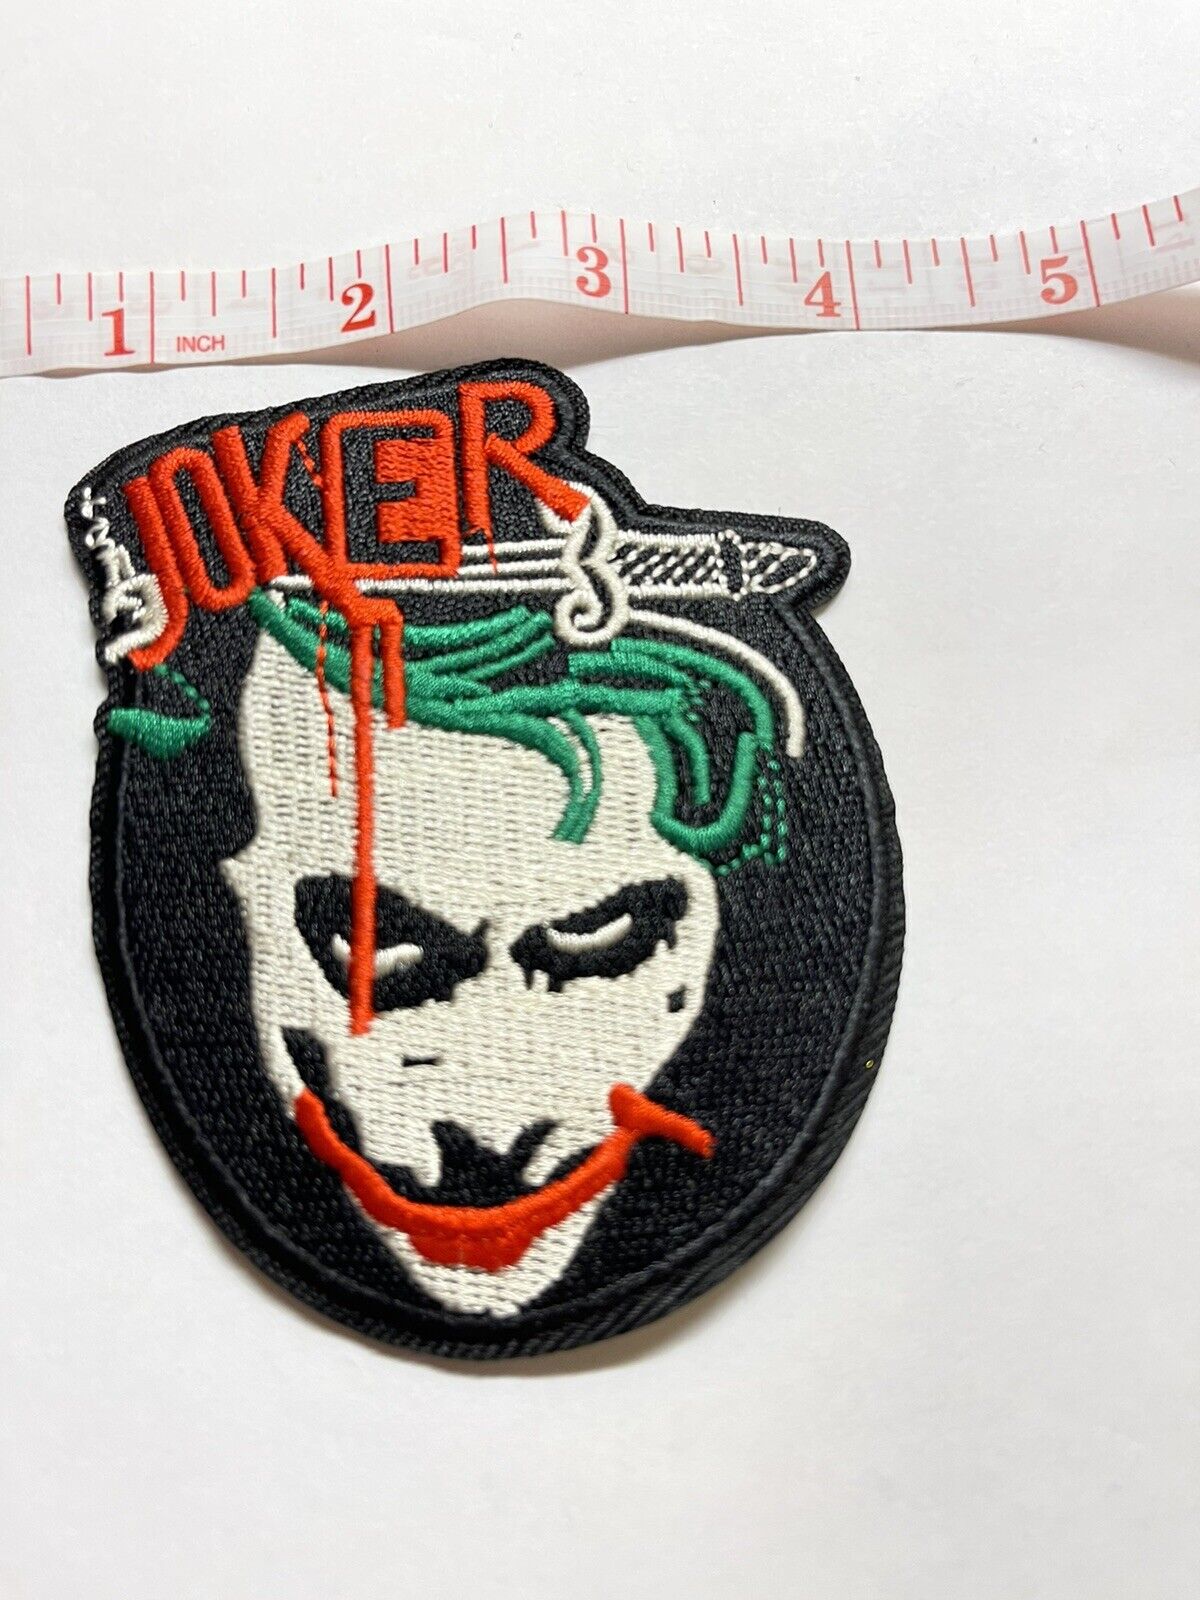 joker iron on patch sew-on patch rock metal DC comics Batman | eBay